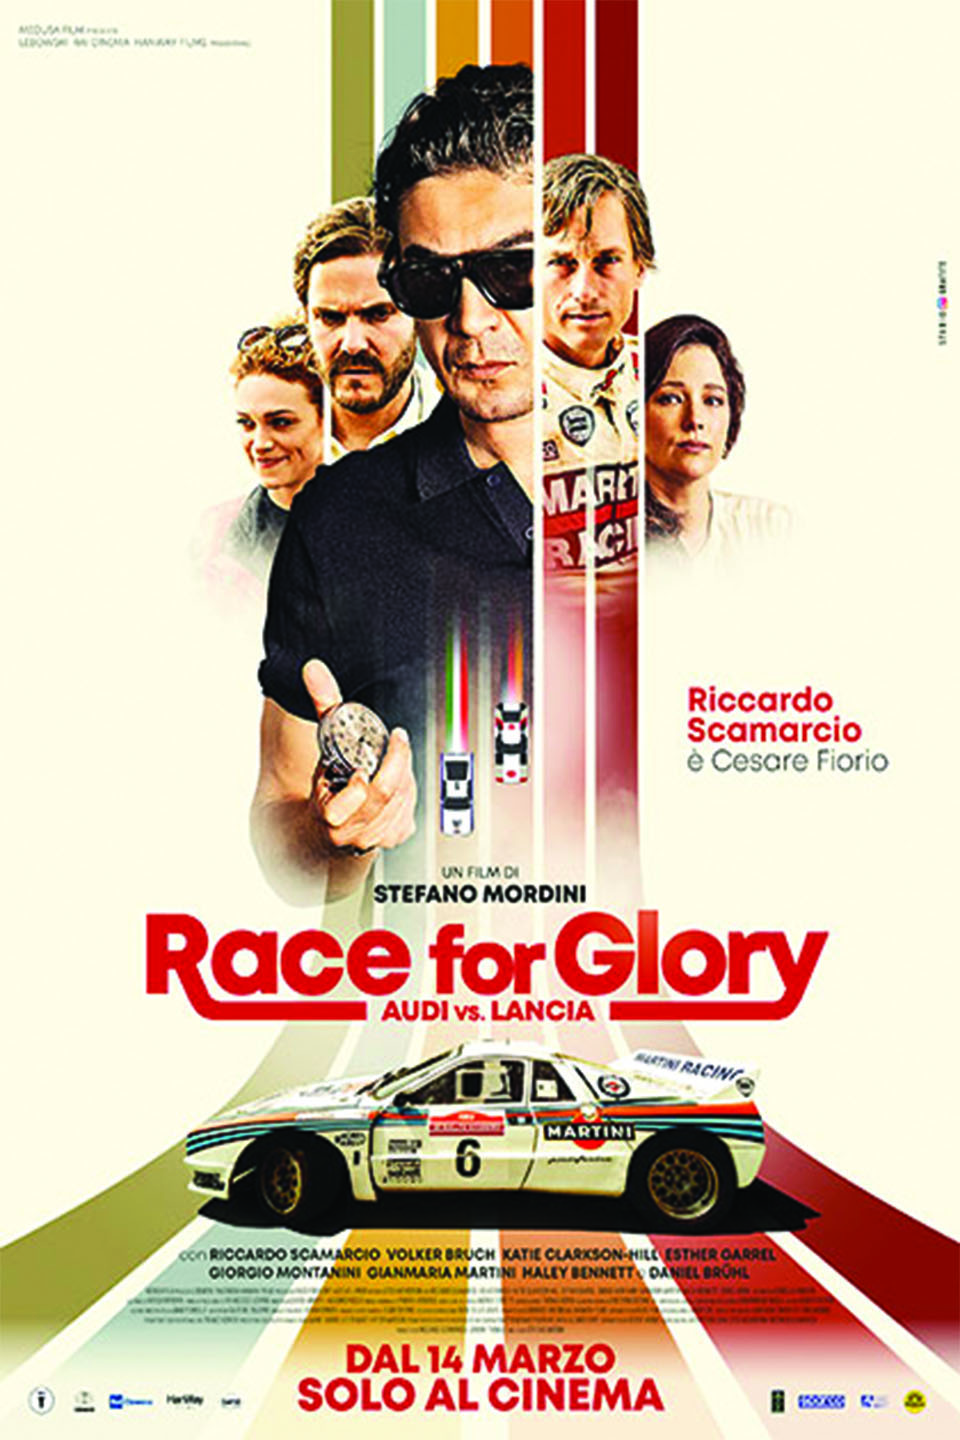 Race for Glory - Audi Vs Lancia